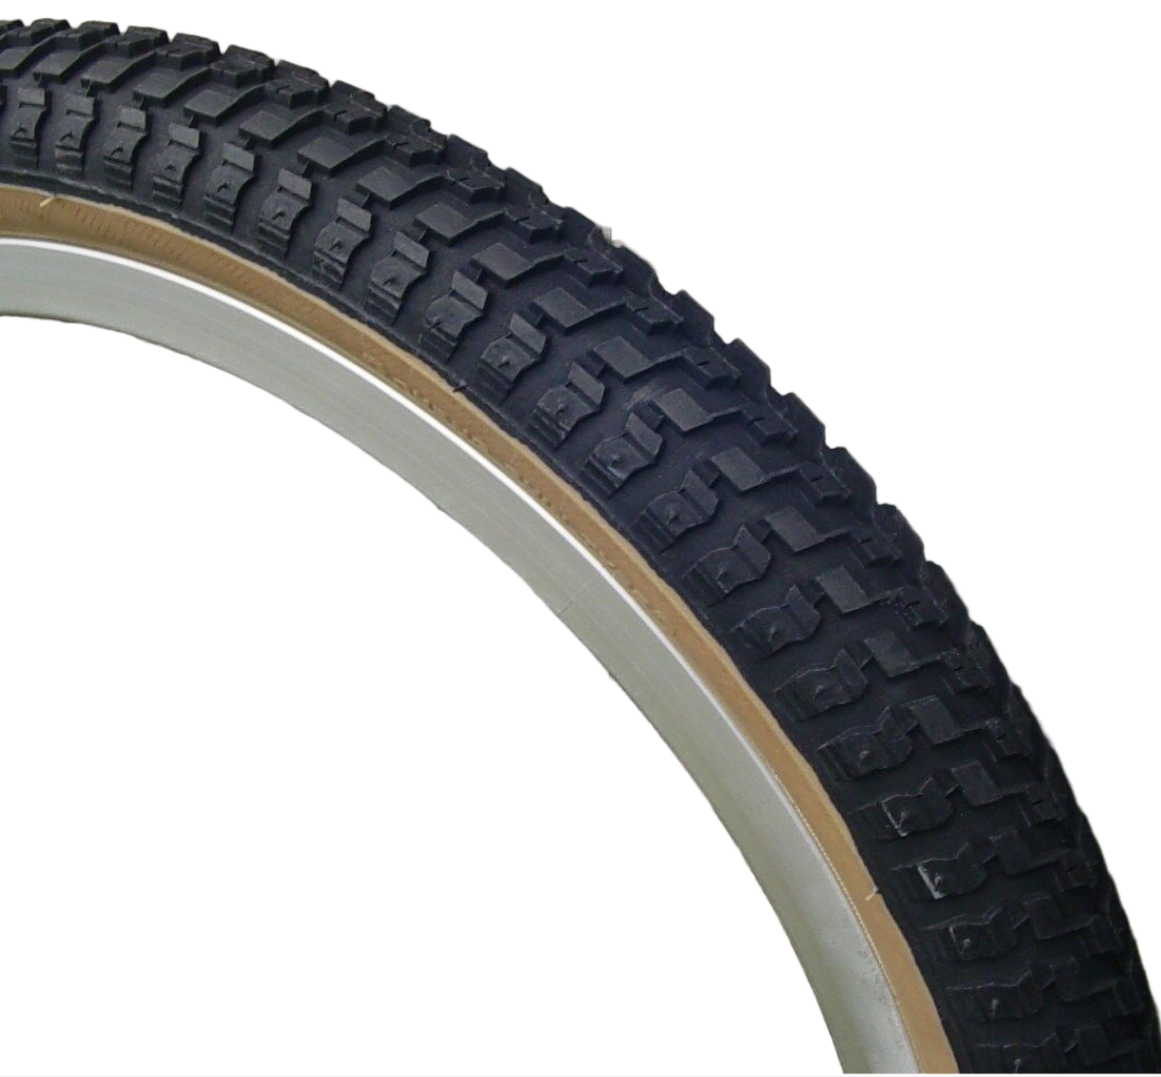 20x1.75 CST Snakebelly BMX Tire - Black w/ Skinwall